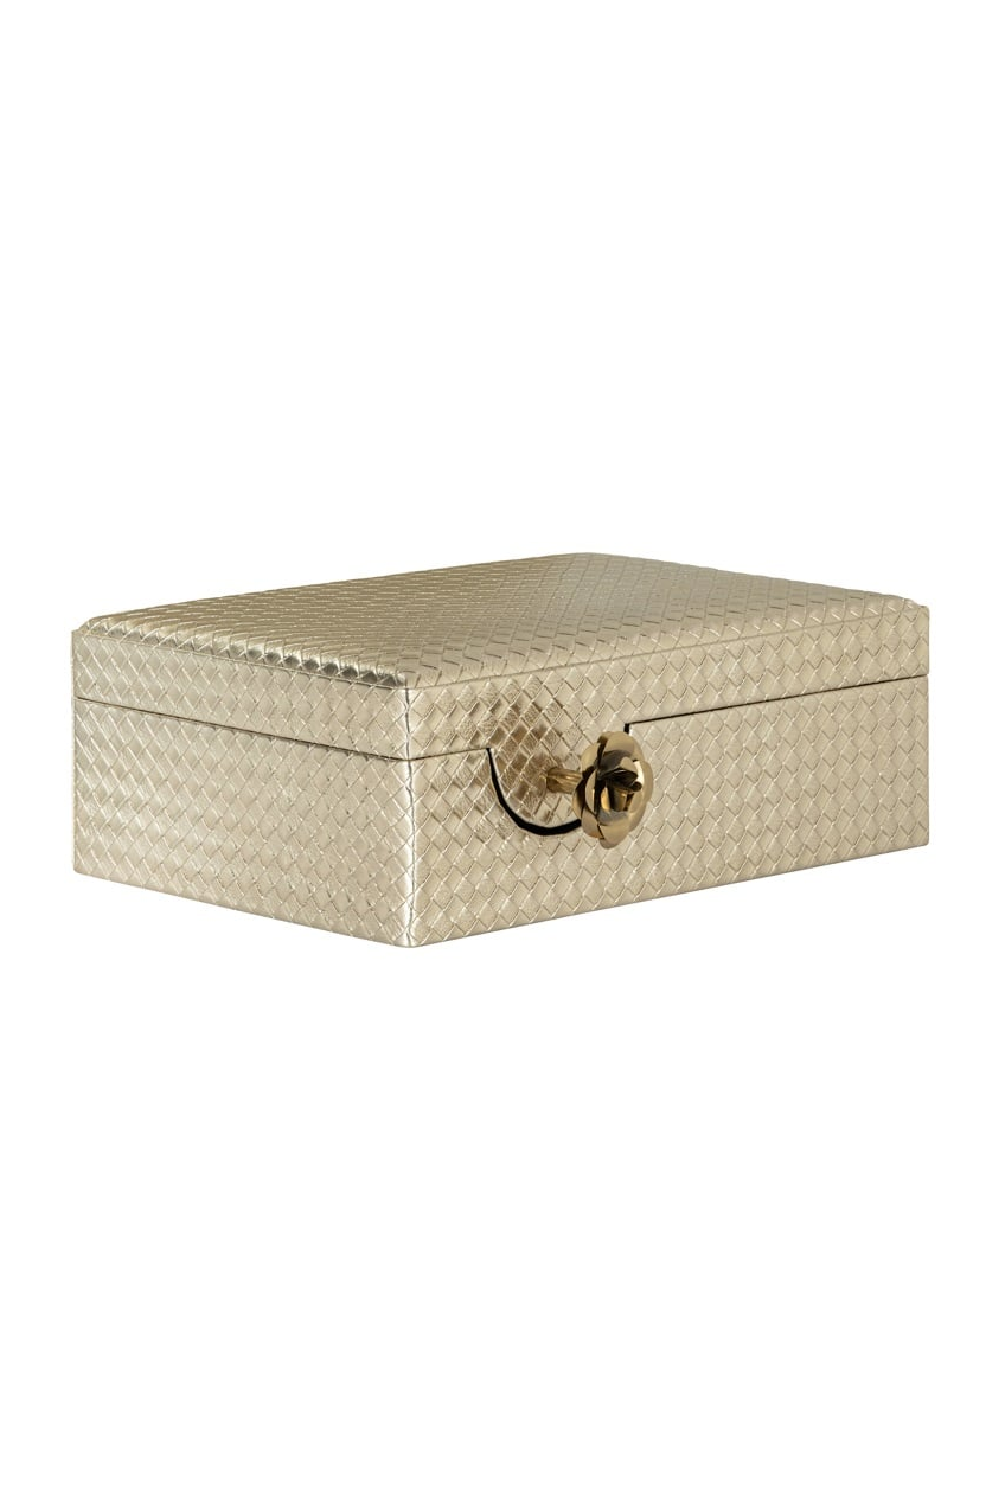 Gold Jewelry Box | OROA Trace | Oroa.com